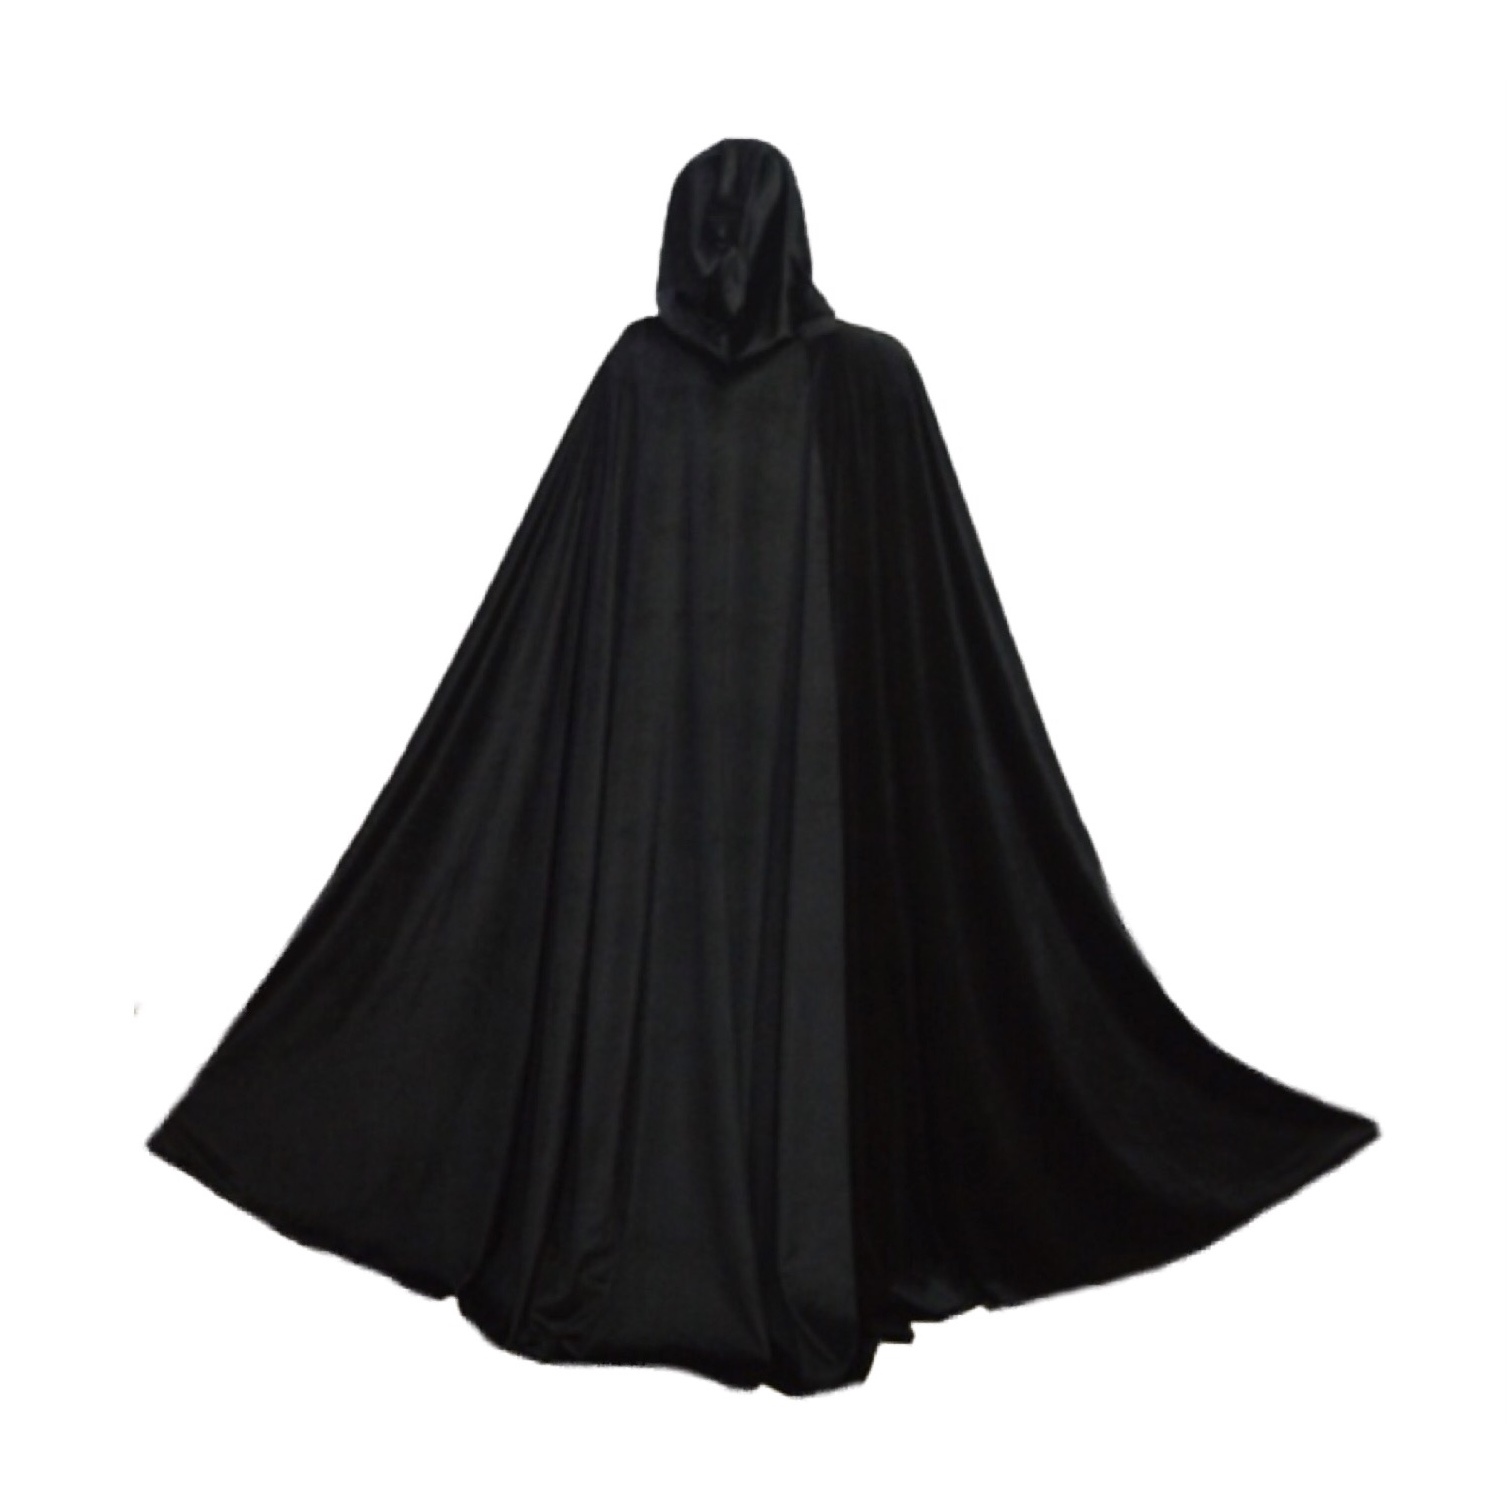 Black Cape Hooded Stretch Velvet Costume Cape Fairytale Fantasy Cloak ...